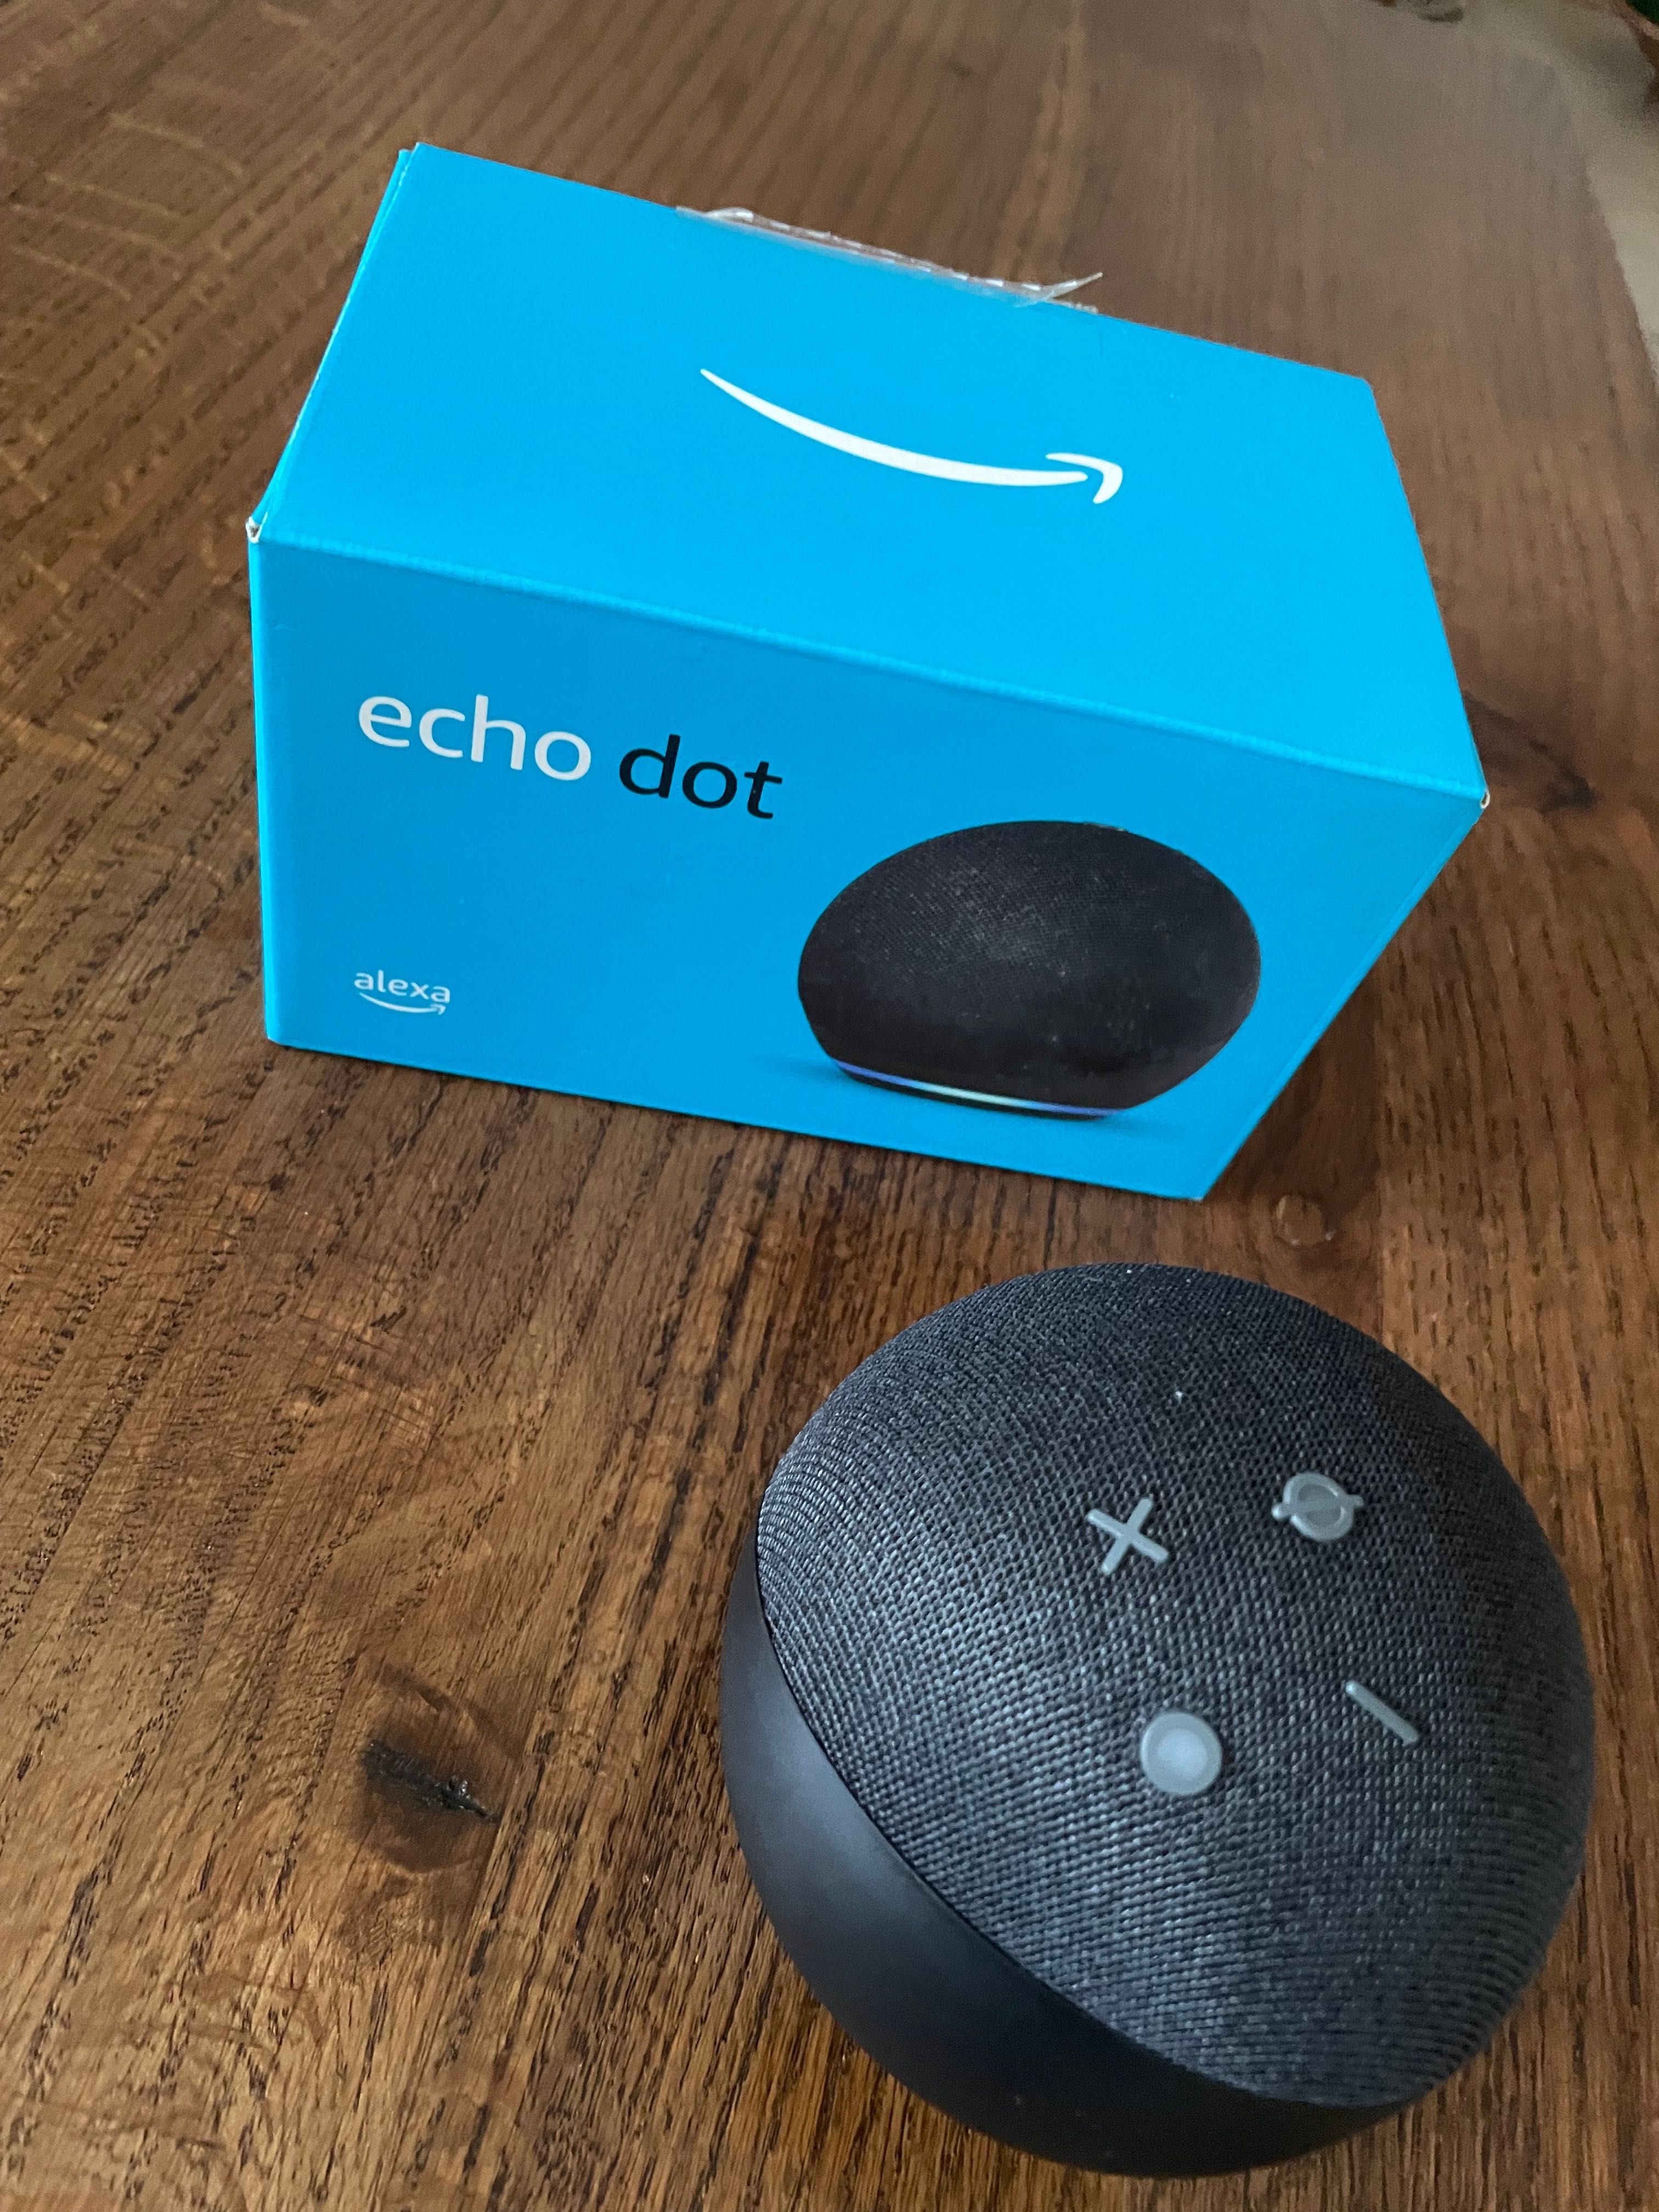 Alexa - Echo Dot